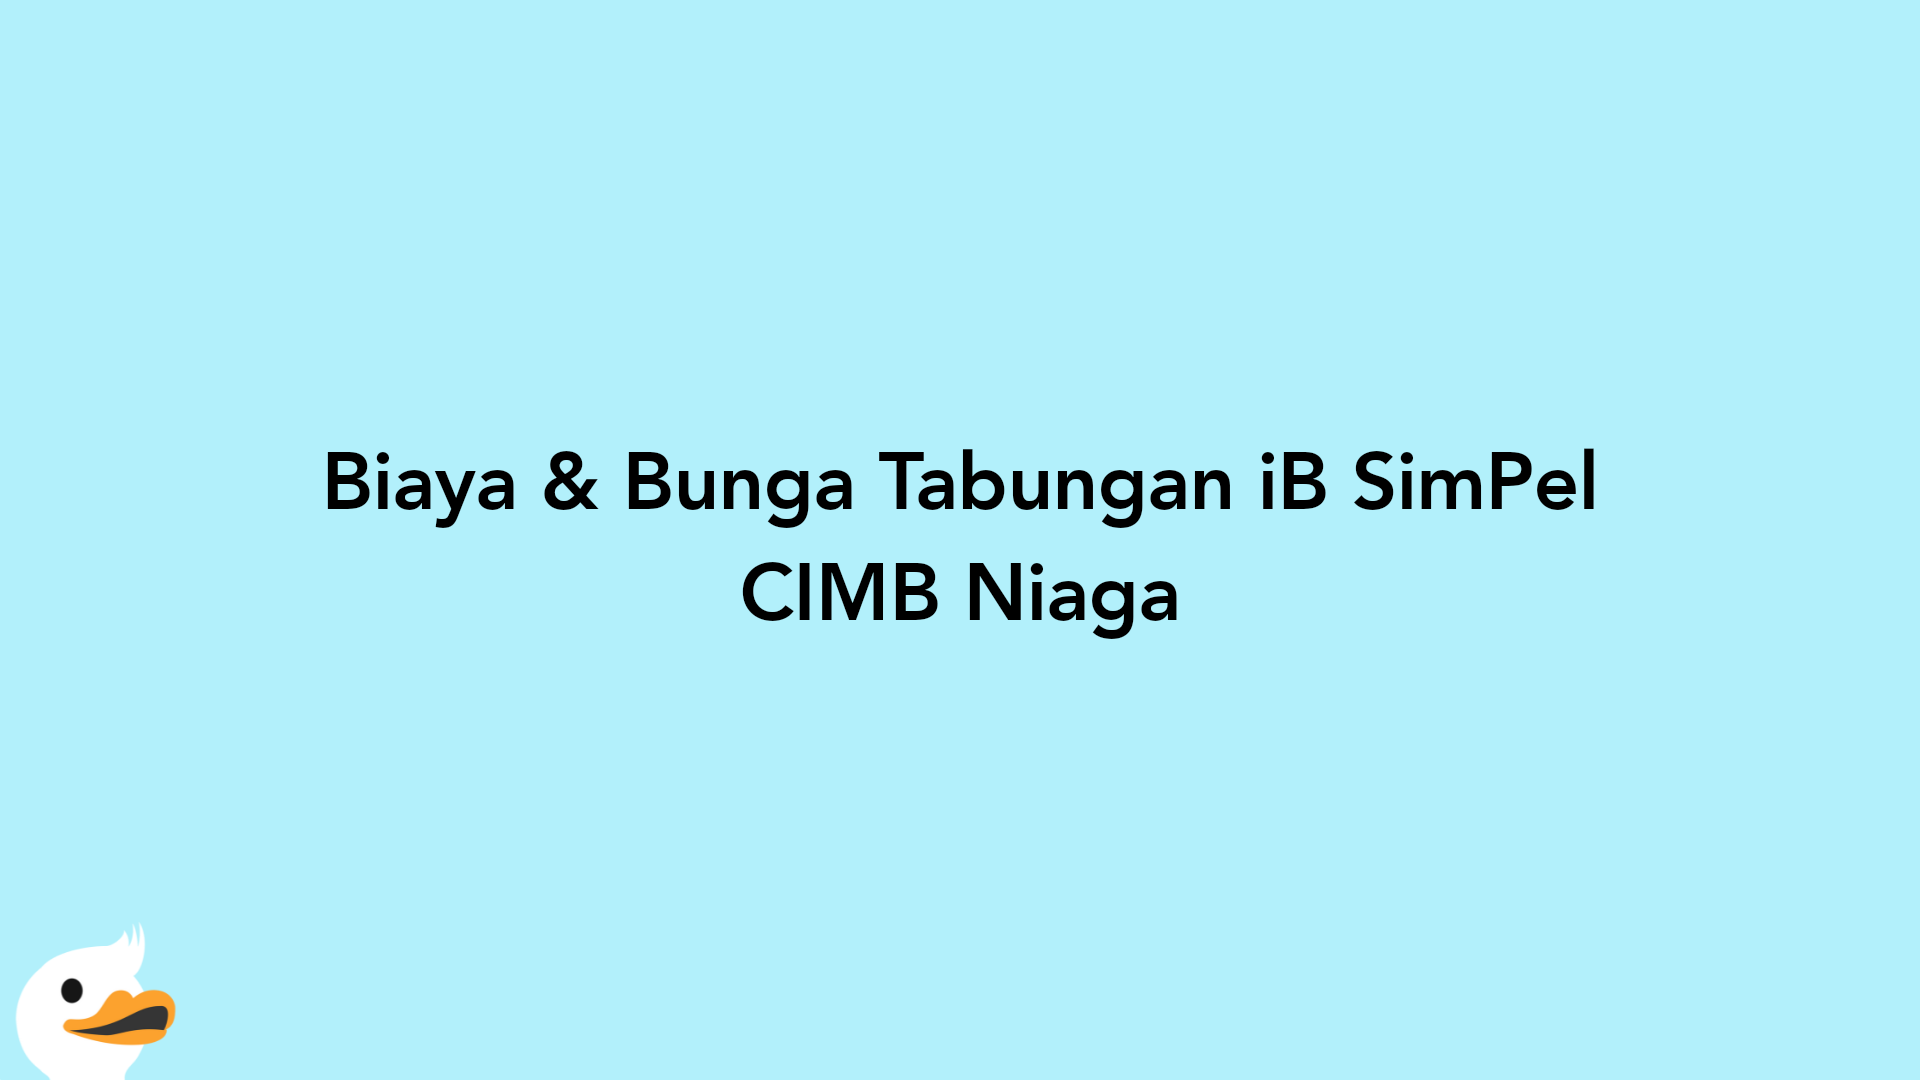 Biaya & Bunga Tabungan iB SimPel CIMB Niaga